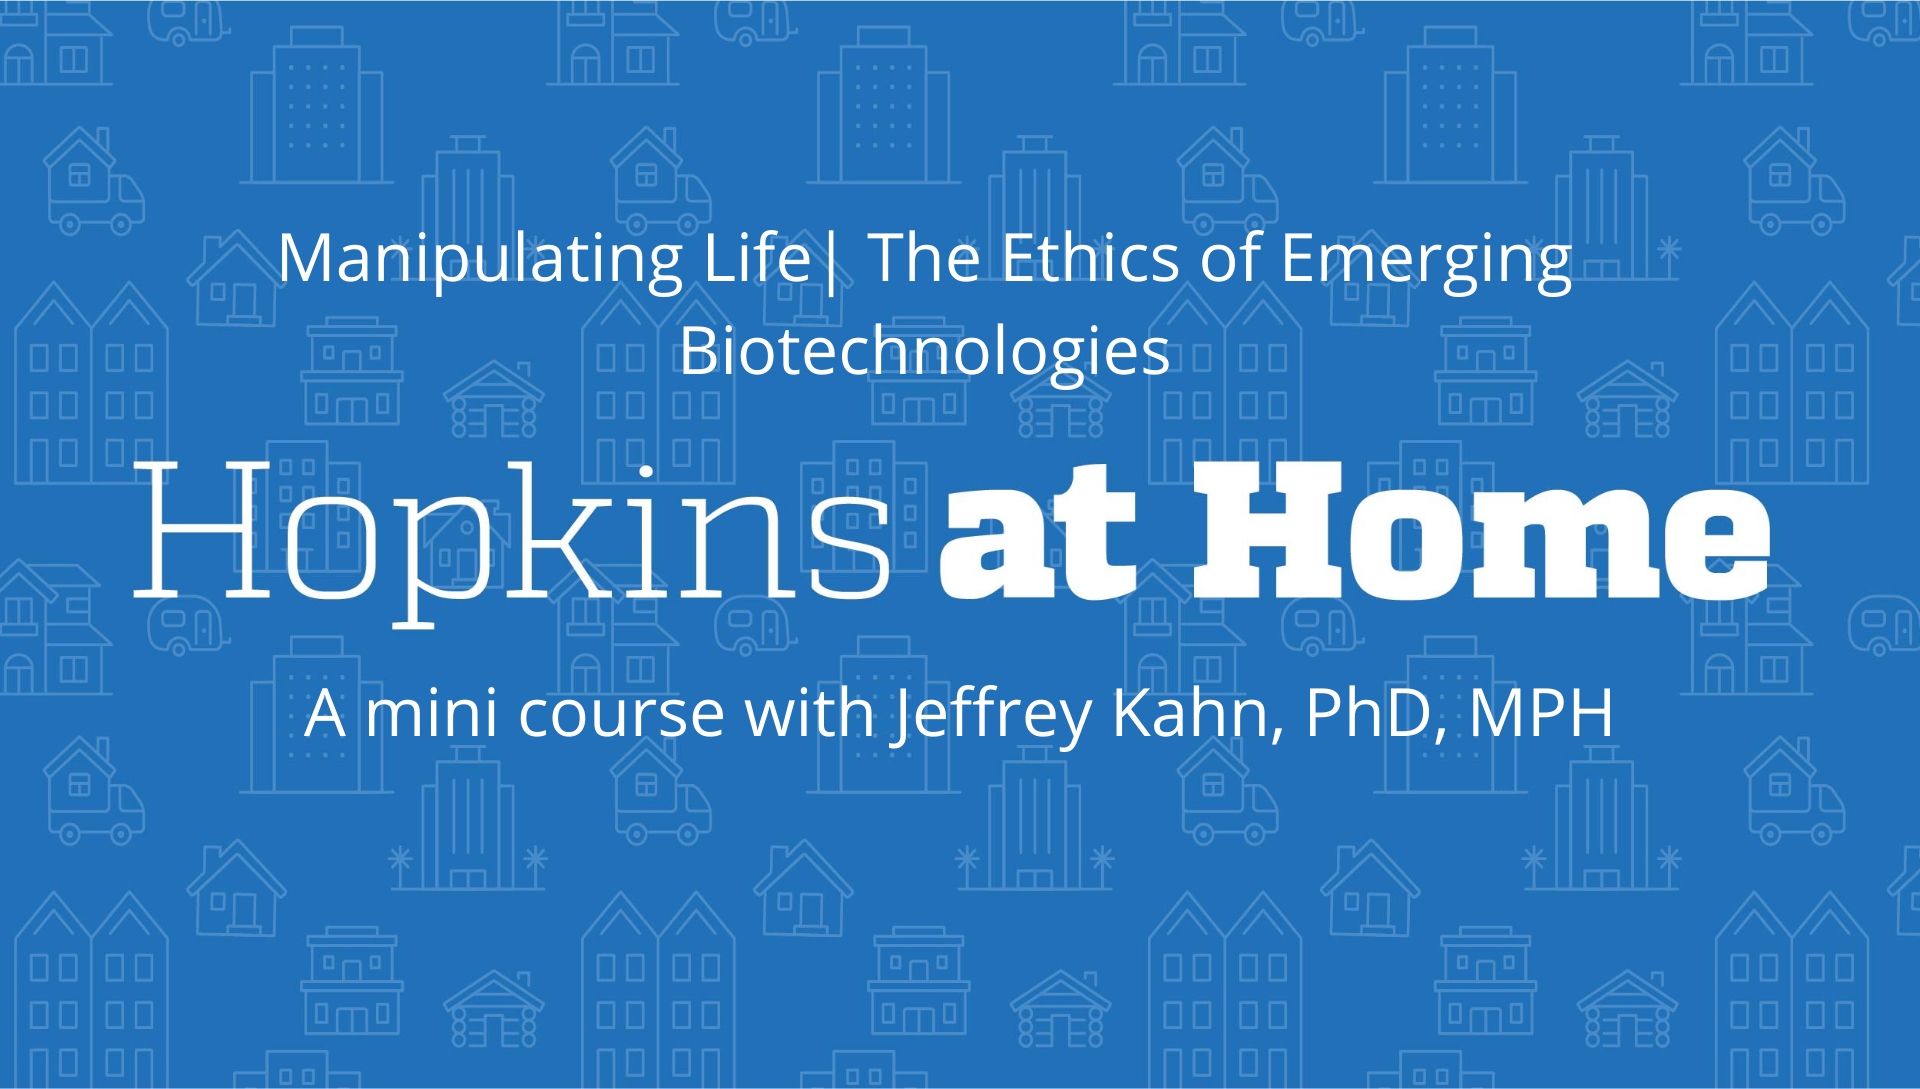 Manipulating Life: The Ethics of Emerging Biotechnologies